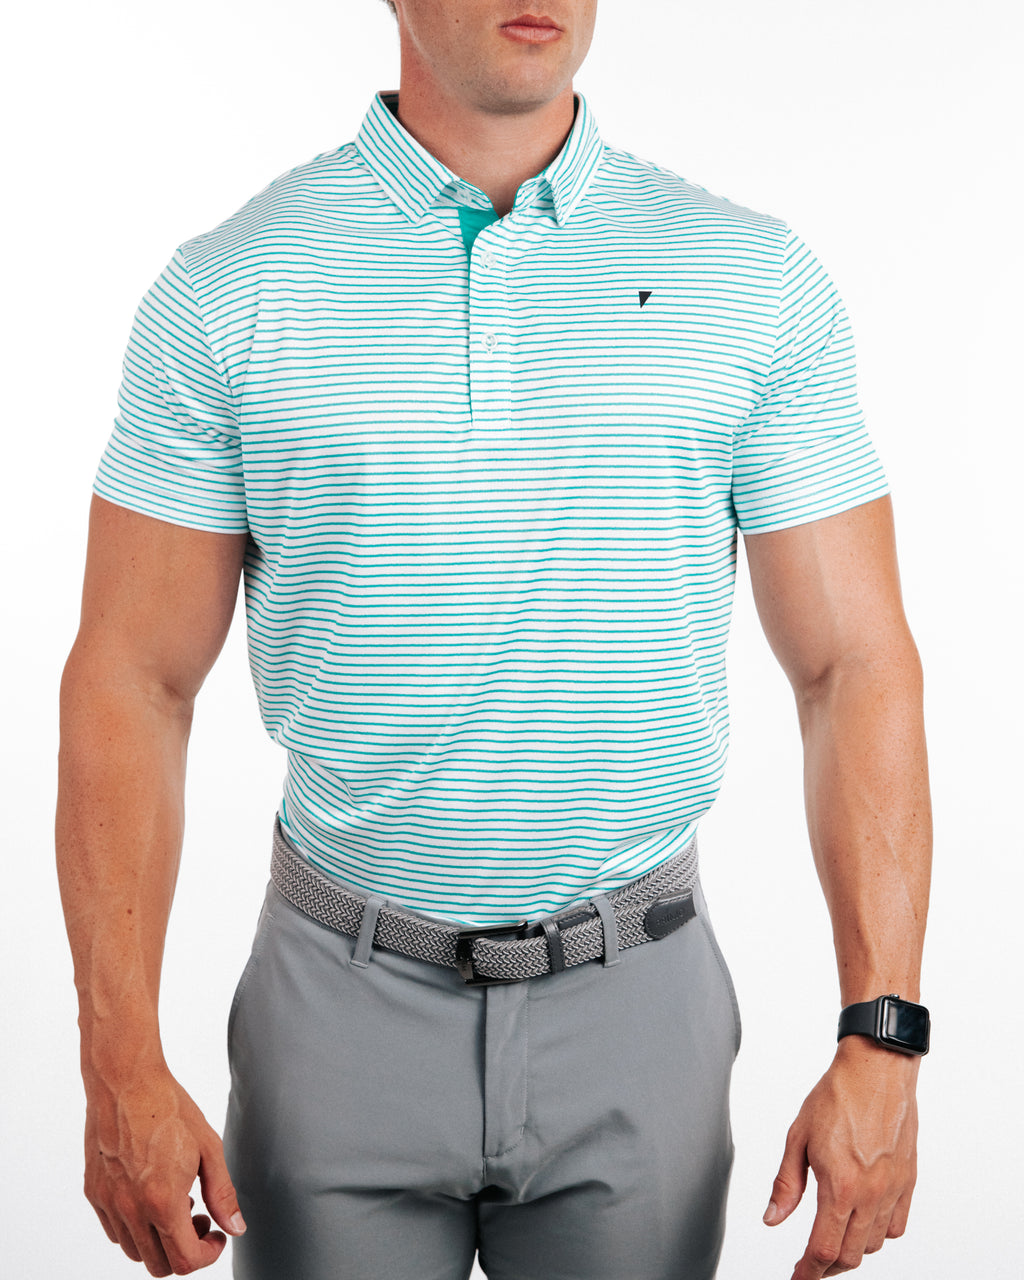 Primo Classic Polo - Teal Stripes – Primo Golf Apparel